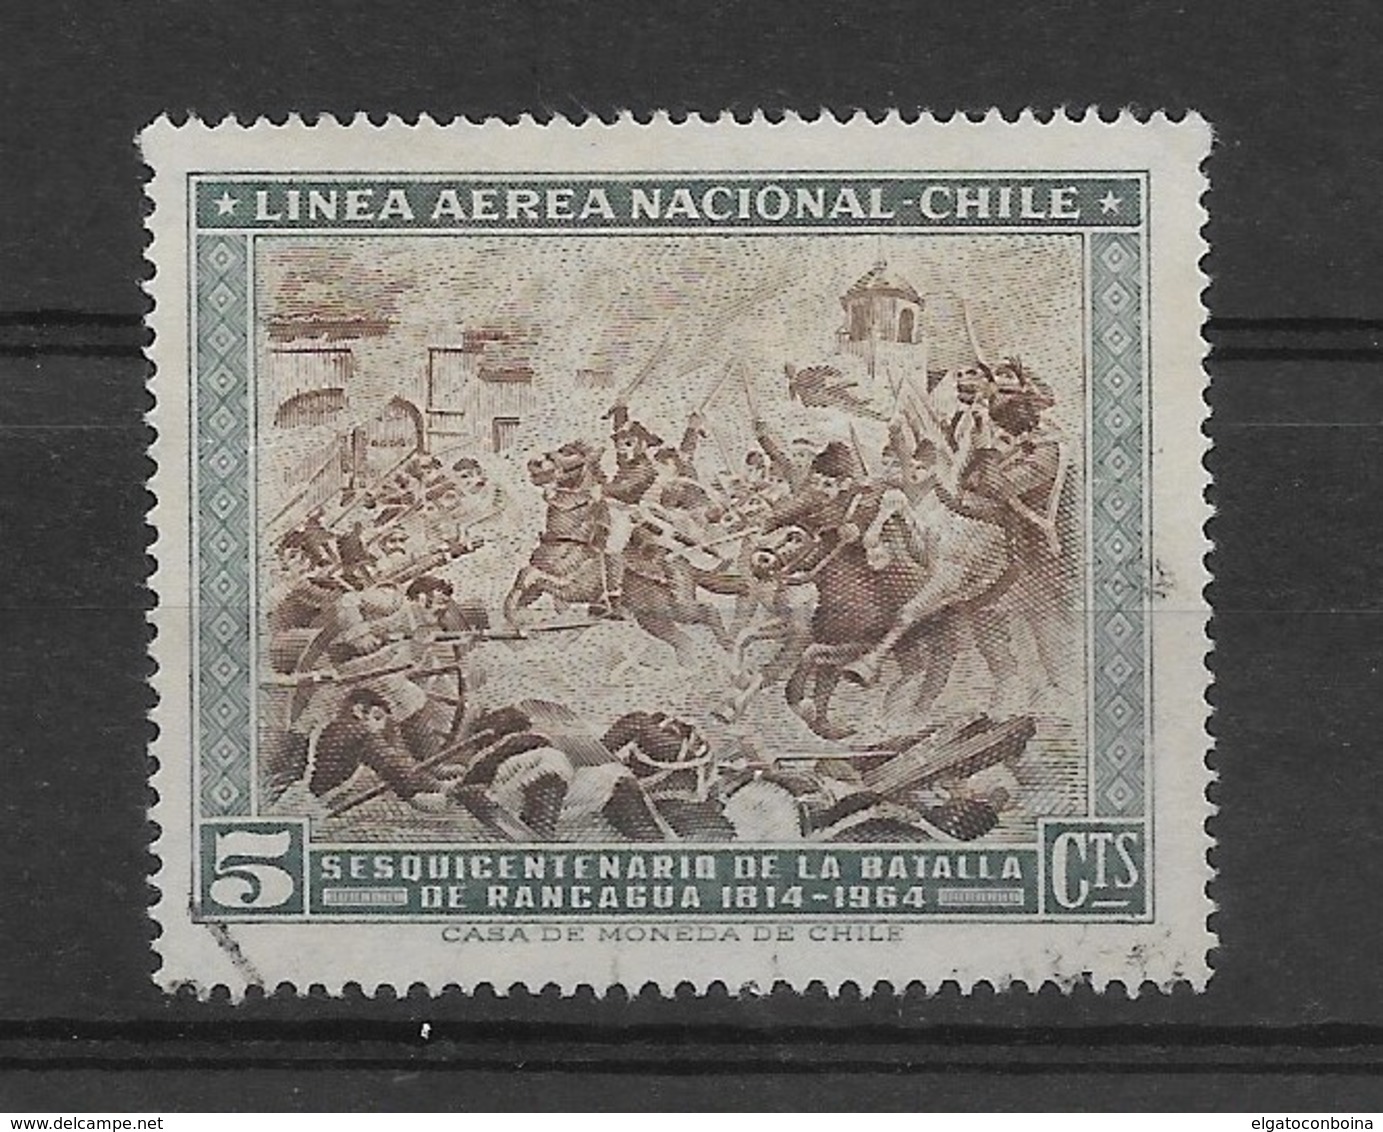 CHILE 1964, 150TH ANNIVERSARY BATTLE OF RANCAGUA, HISTORY 1 VALUE, SC# C255 MICHEL 636 USED - Chile